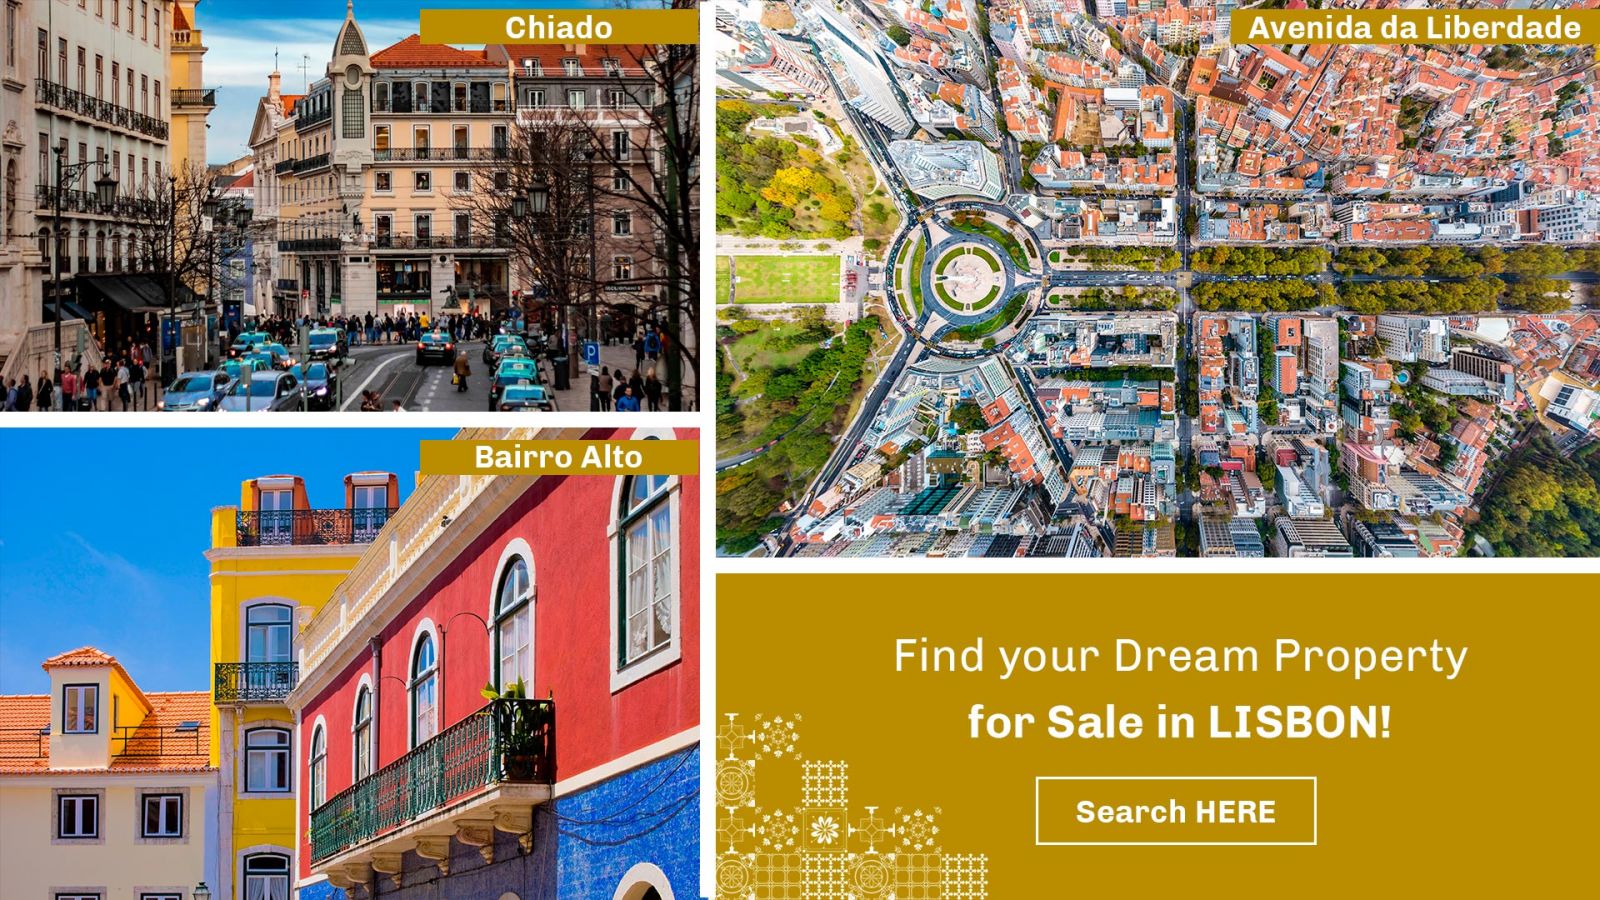 Lisboa, Chiado, Bairro Alto and Avenida da Liberdade are some of the best areas for real estate investment in Lisbon.